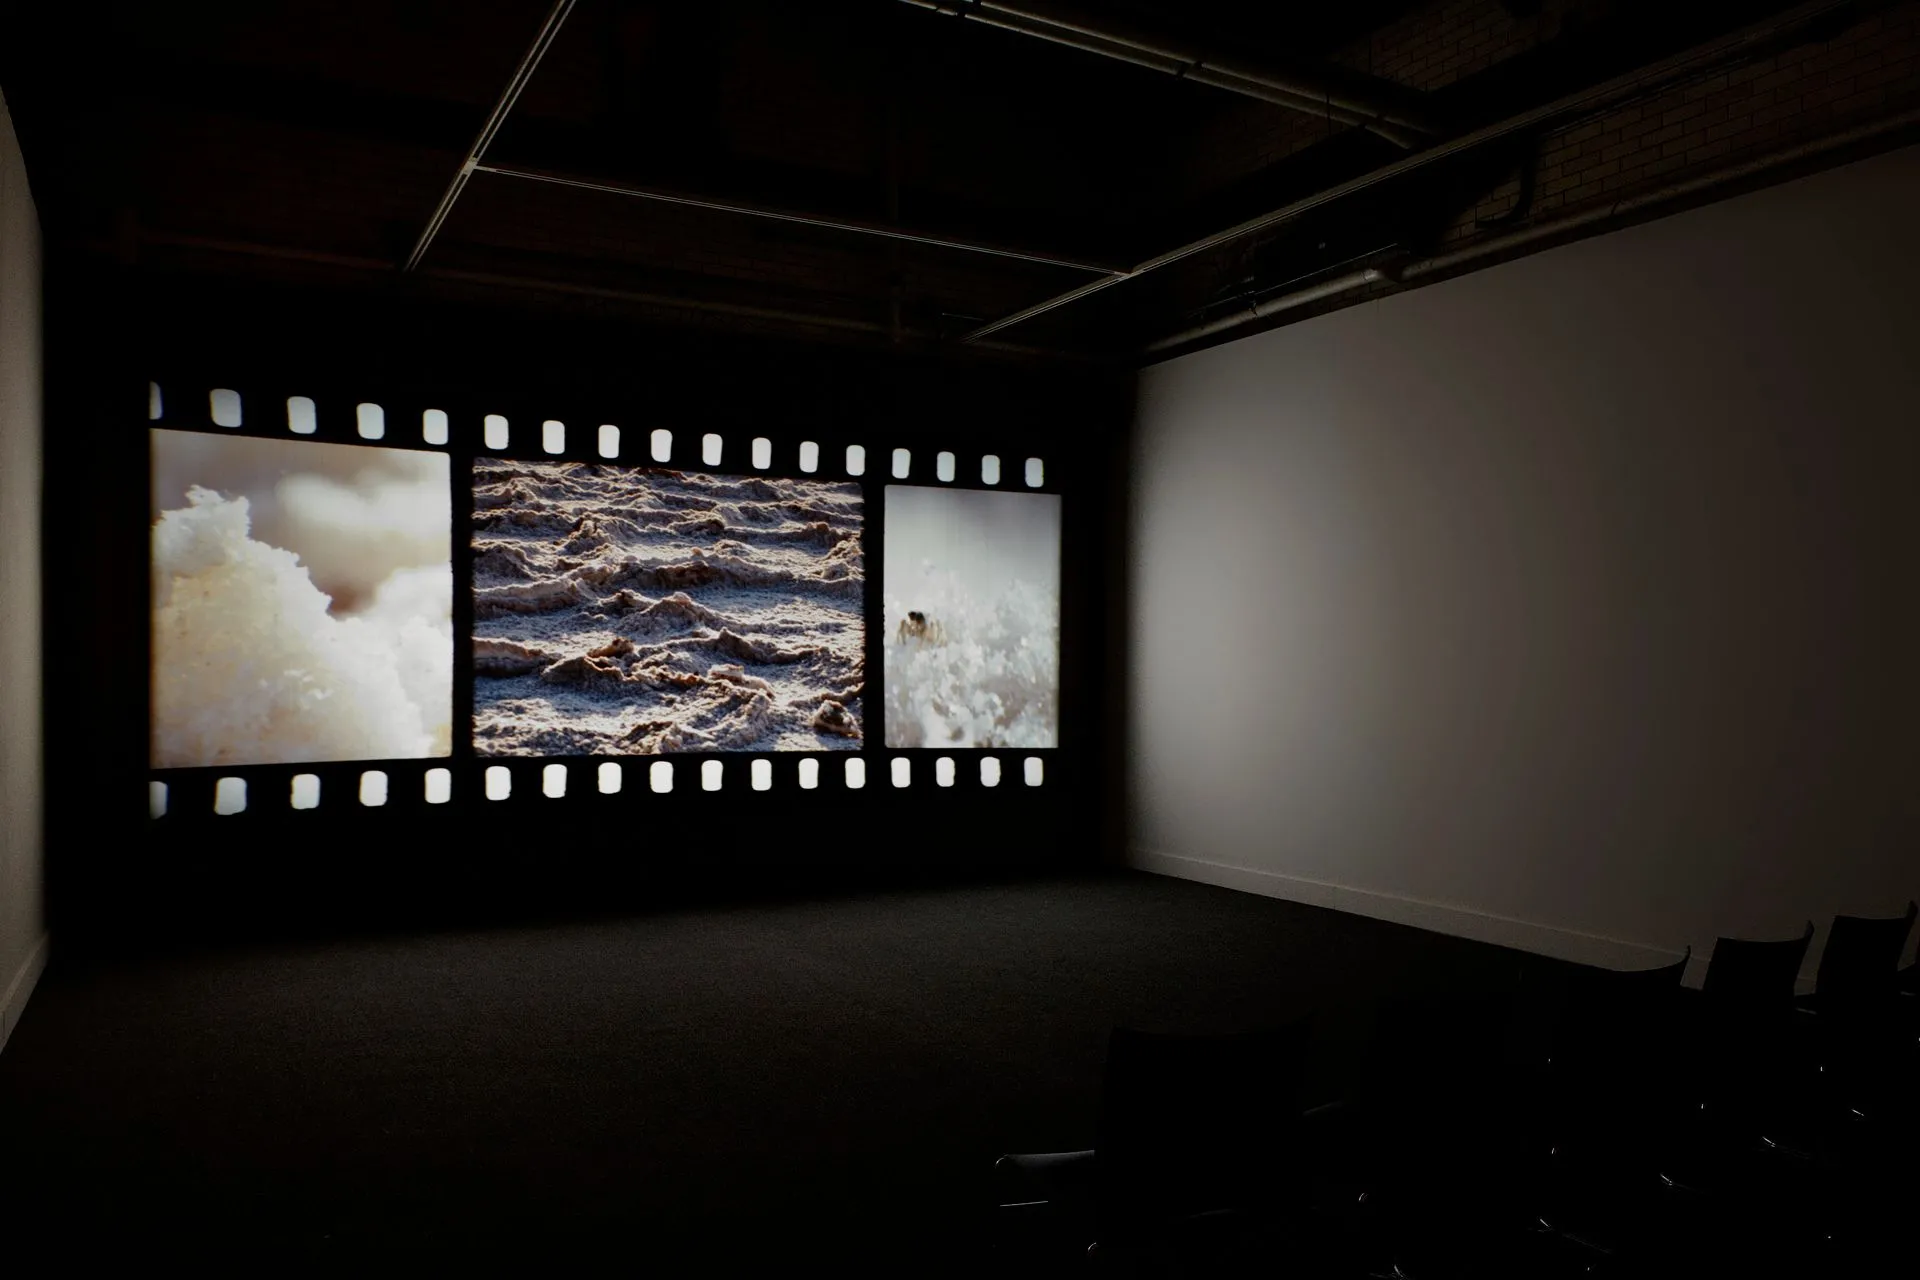 Installation view, "JG: A Film Project by Tacita Dean", Arcadia University Art Gallery, photo: Greenhouse Media